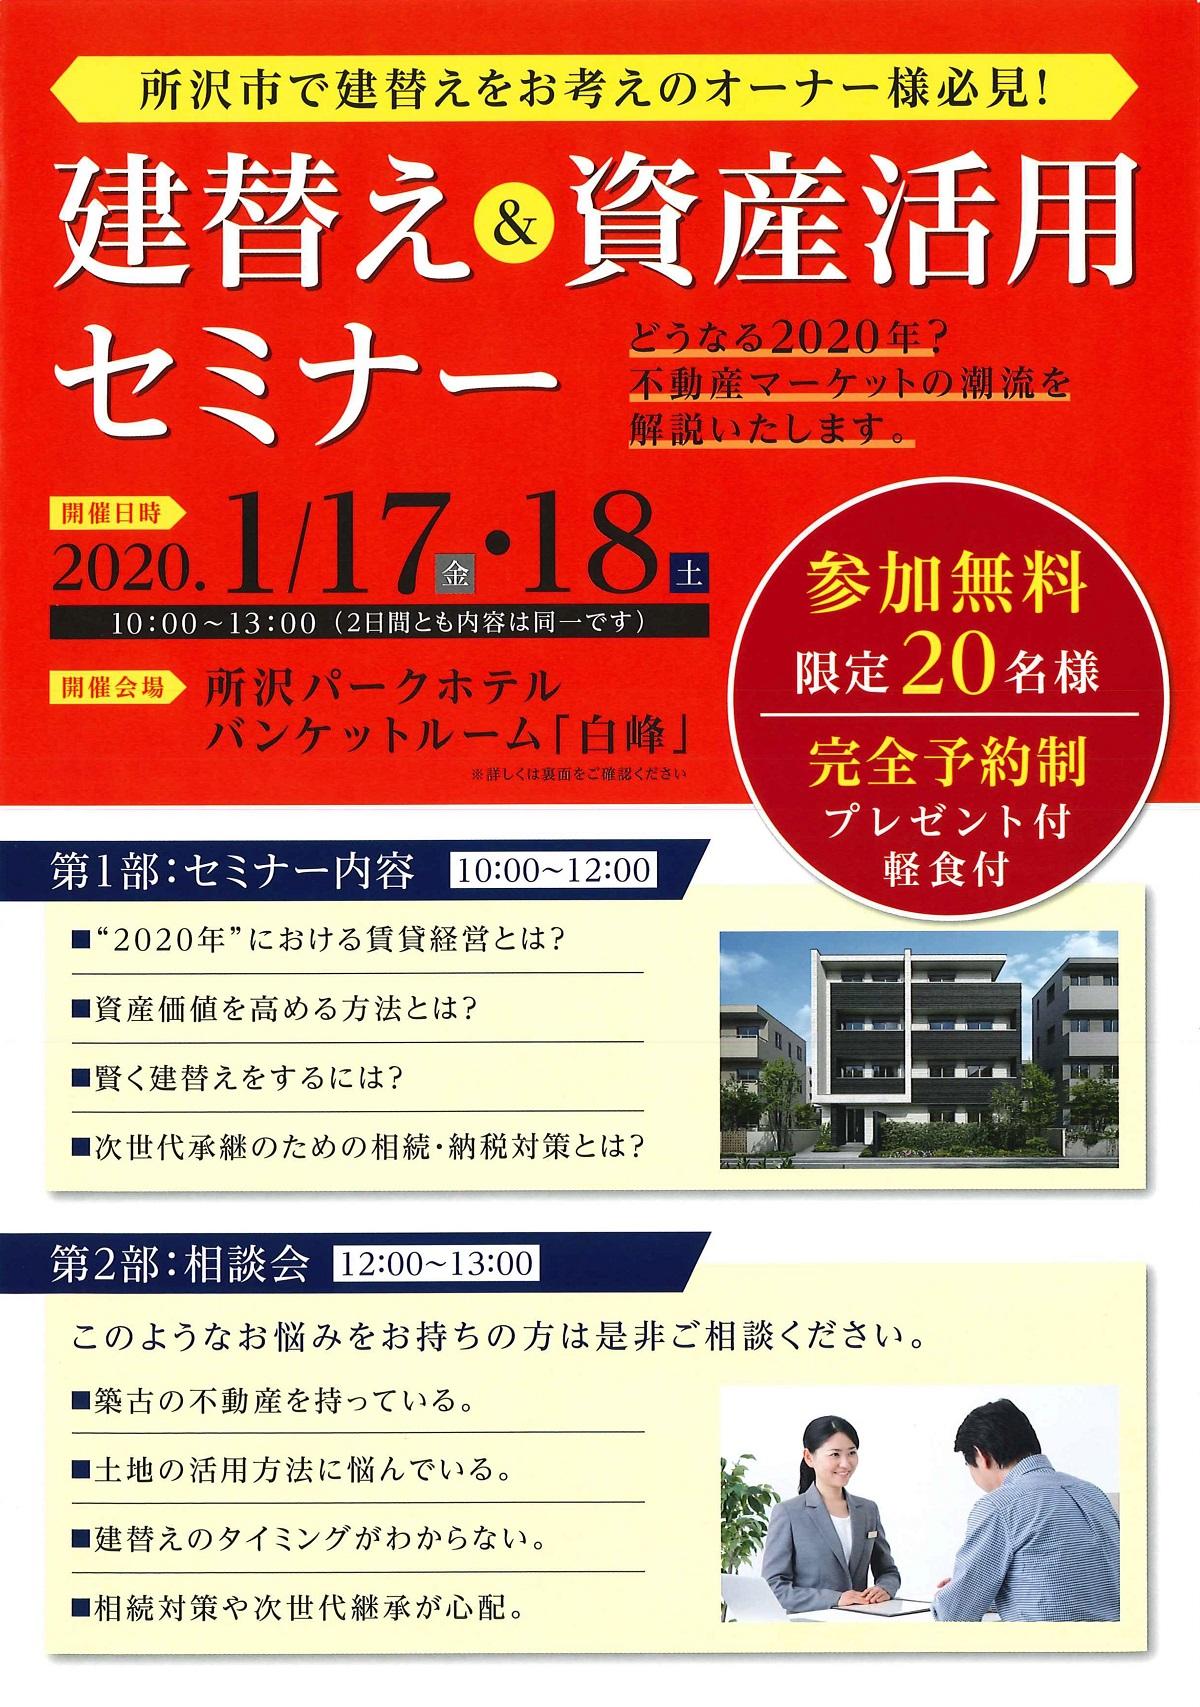 https://www.asahi-kasei.co.jp/maison/hebelplaza/blog/18/urawa/item/2020/200109-1.jpg